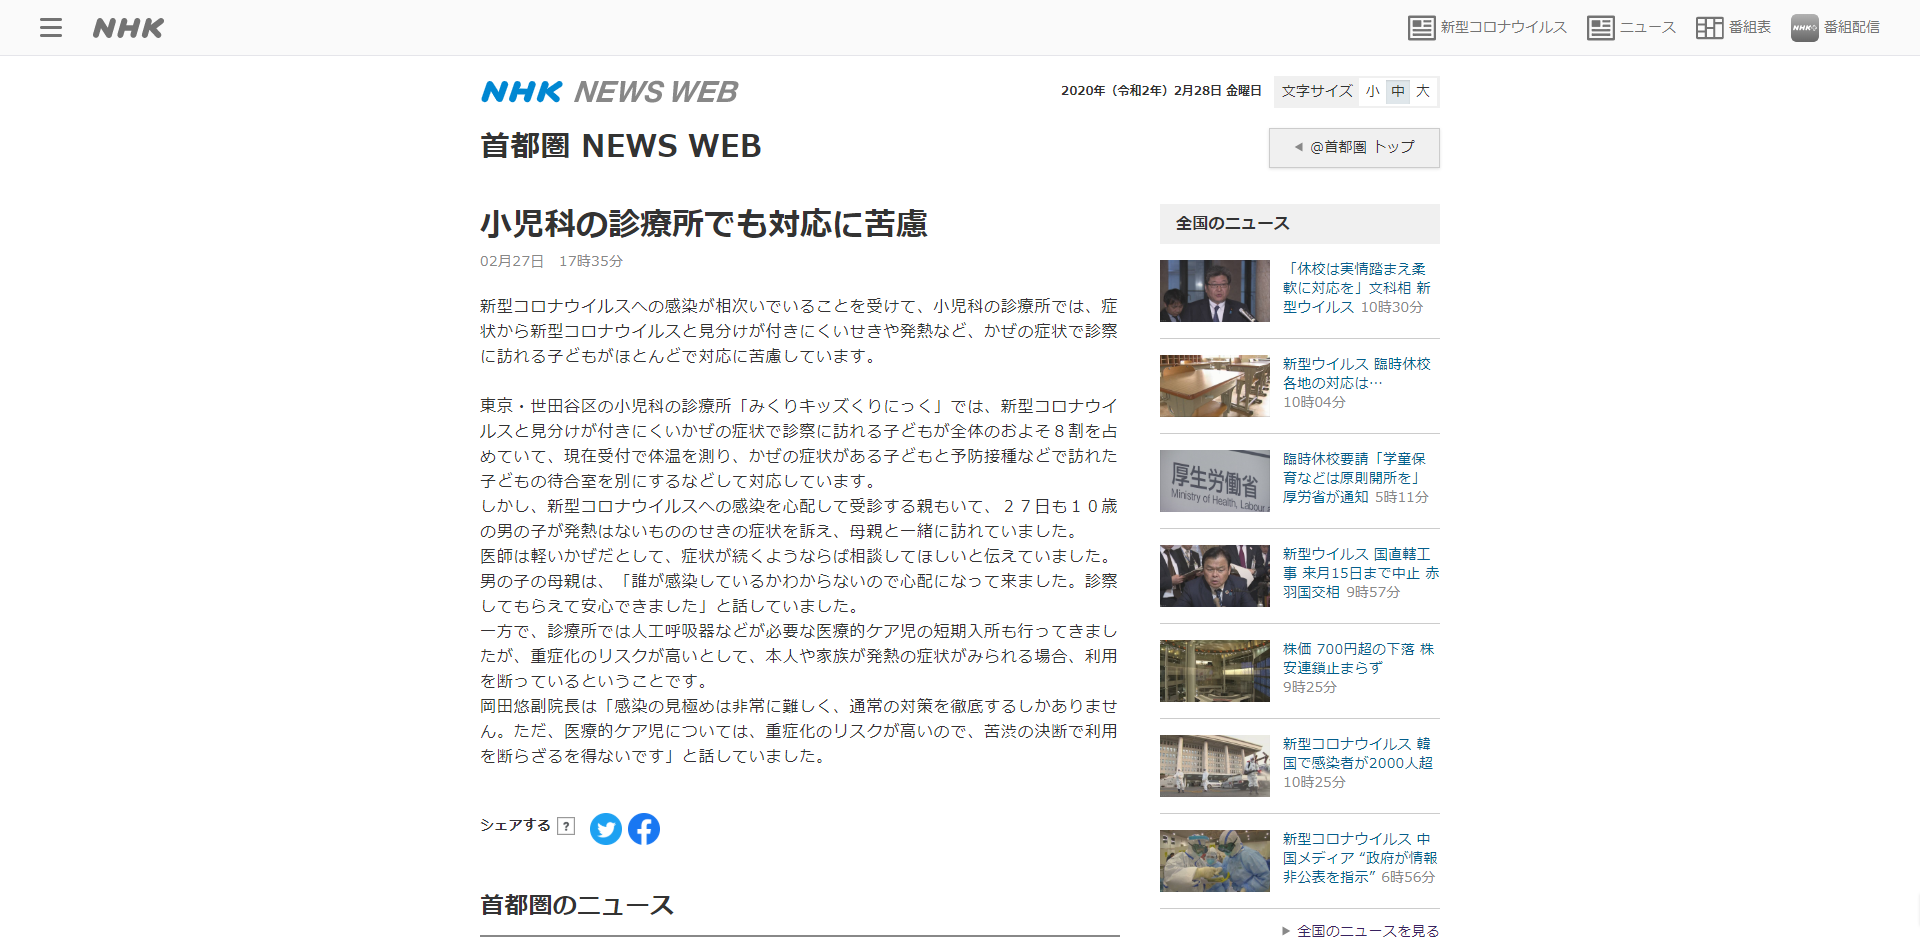 FireShot Capture 468 - 小児科の診療所でも対応に苦慮｜NHK 首都圏のニュース - www3.nhk.or.jp